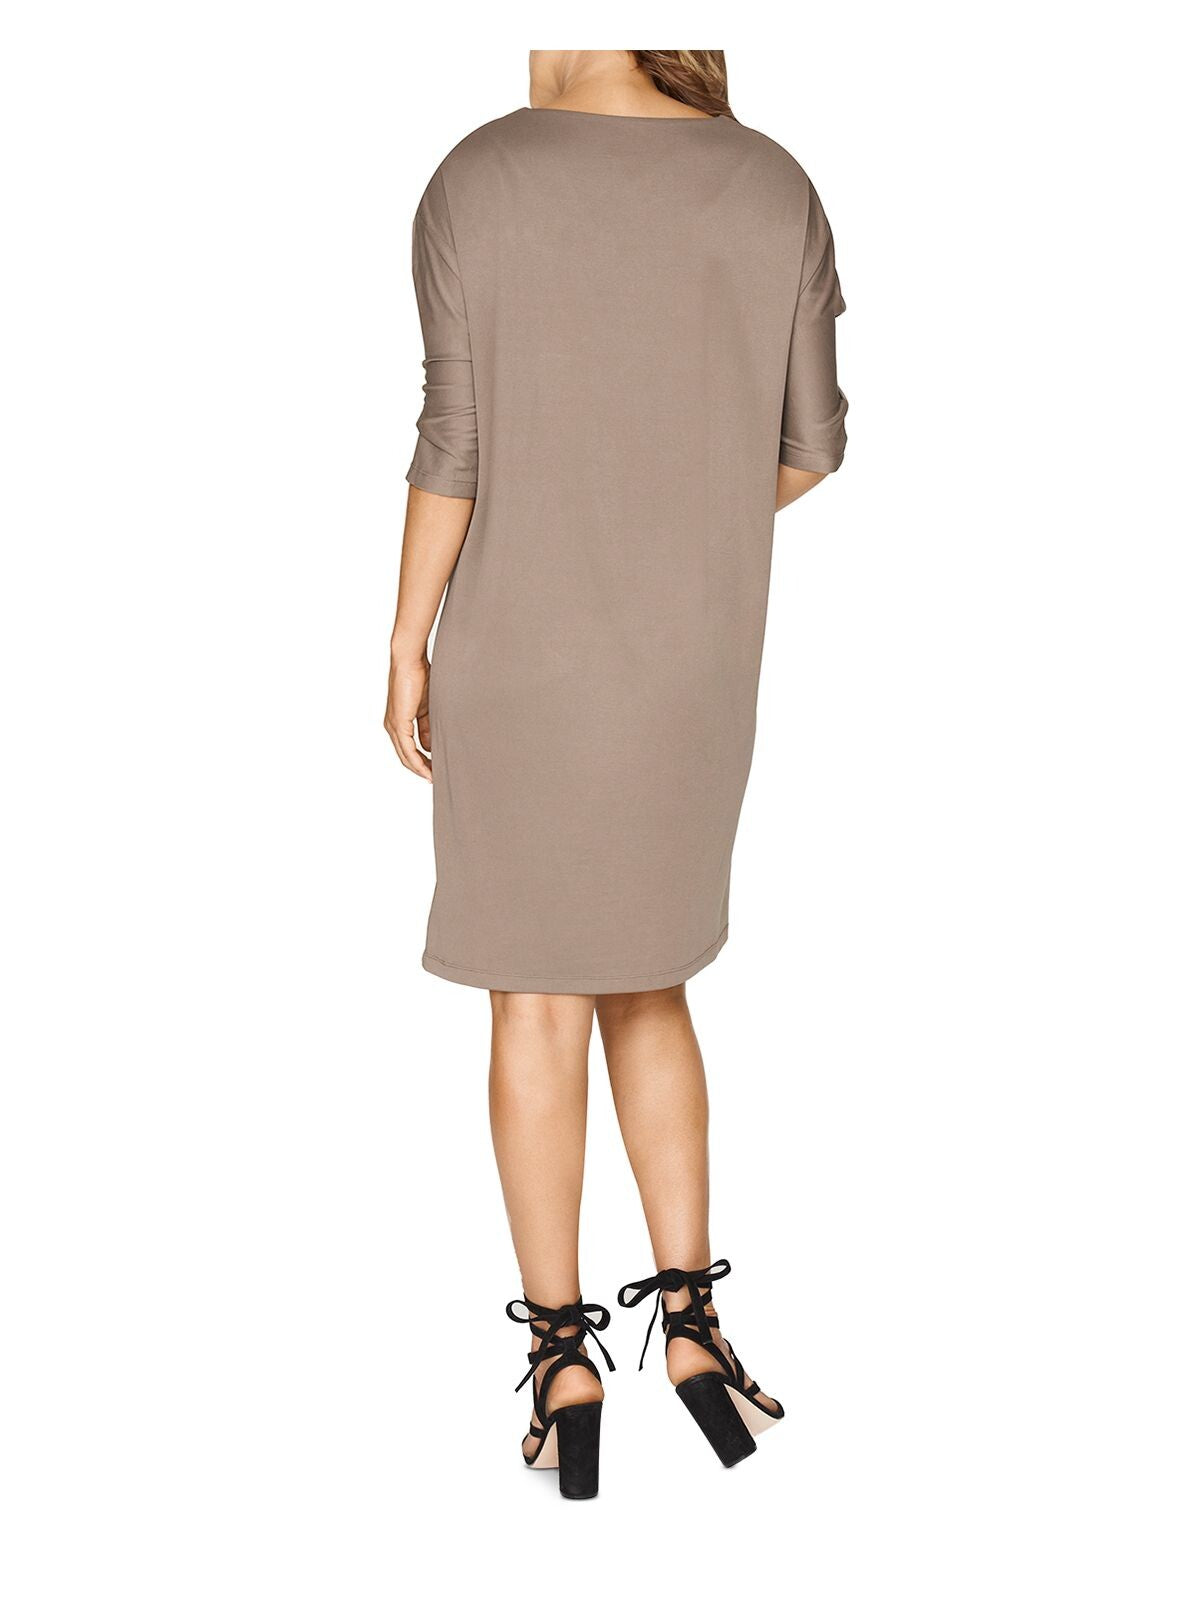 B NEW YORK Womens Brown 3/4 Sleeve Scoop Neck Short Shift Dress L